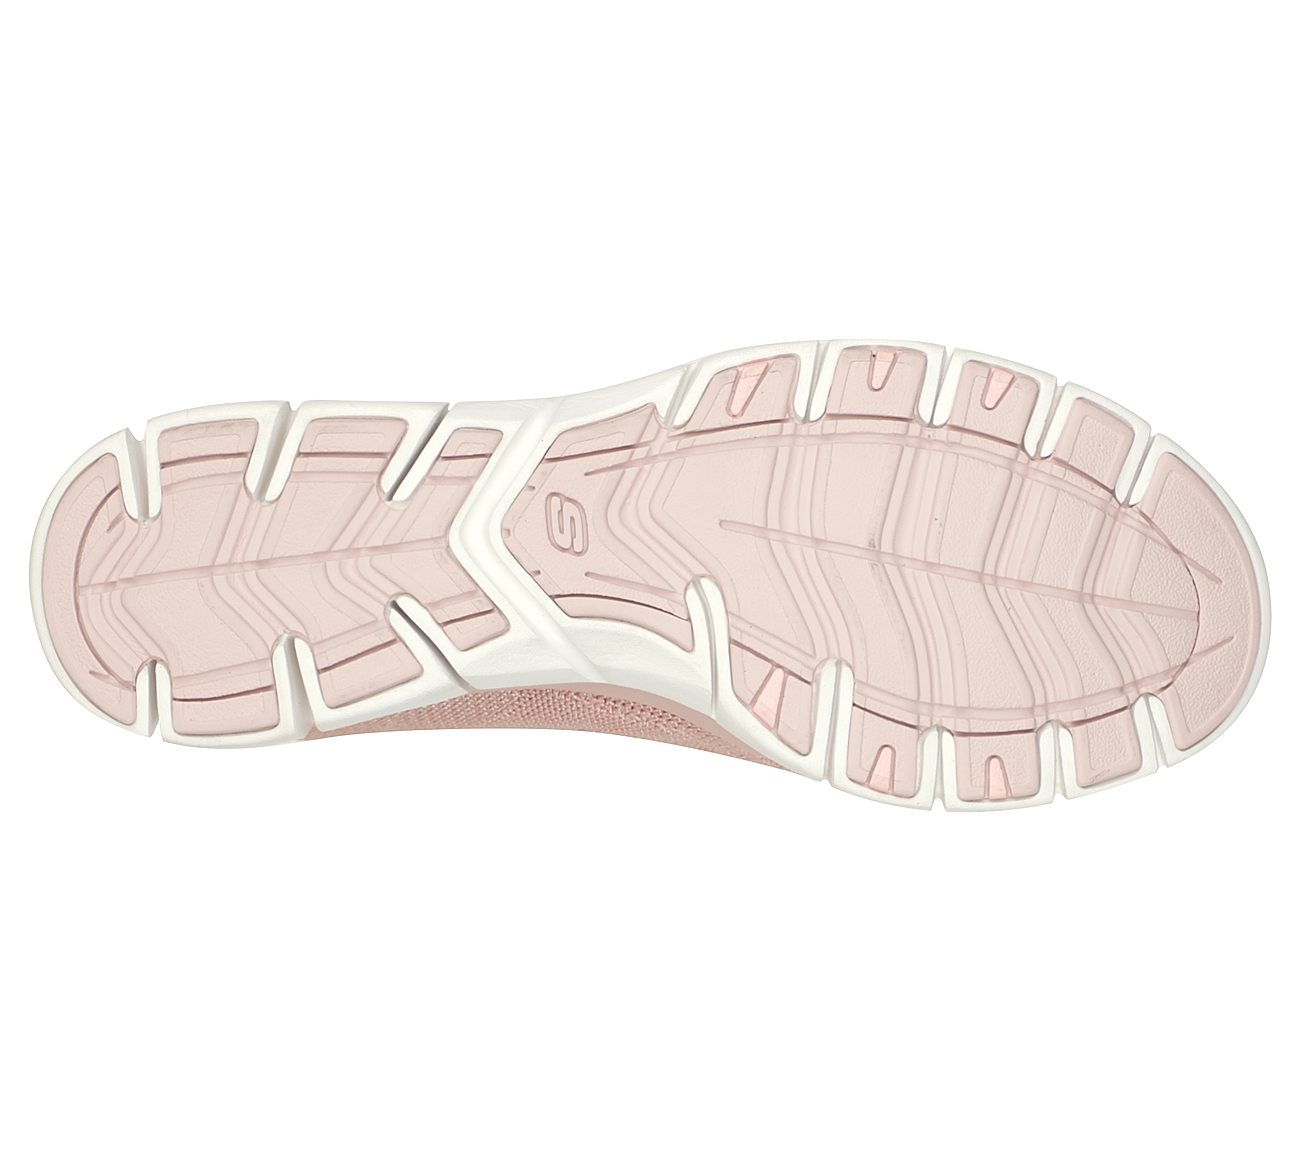 GRATIS - MORE PLAYFUL, ROSE Footwear Bottom View